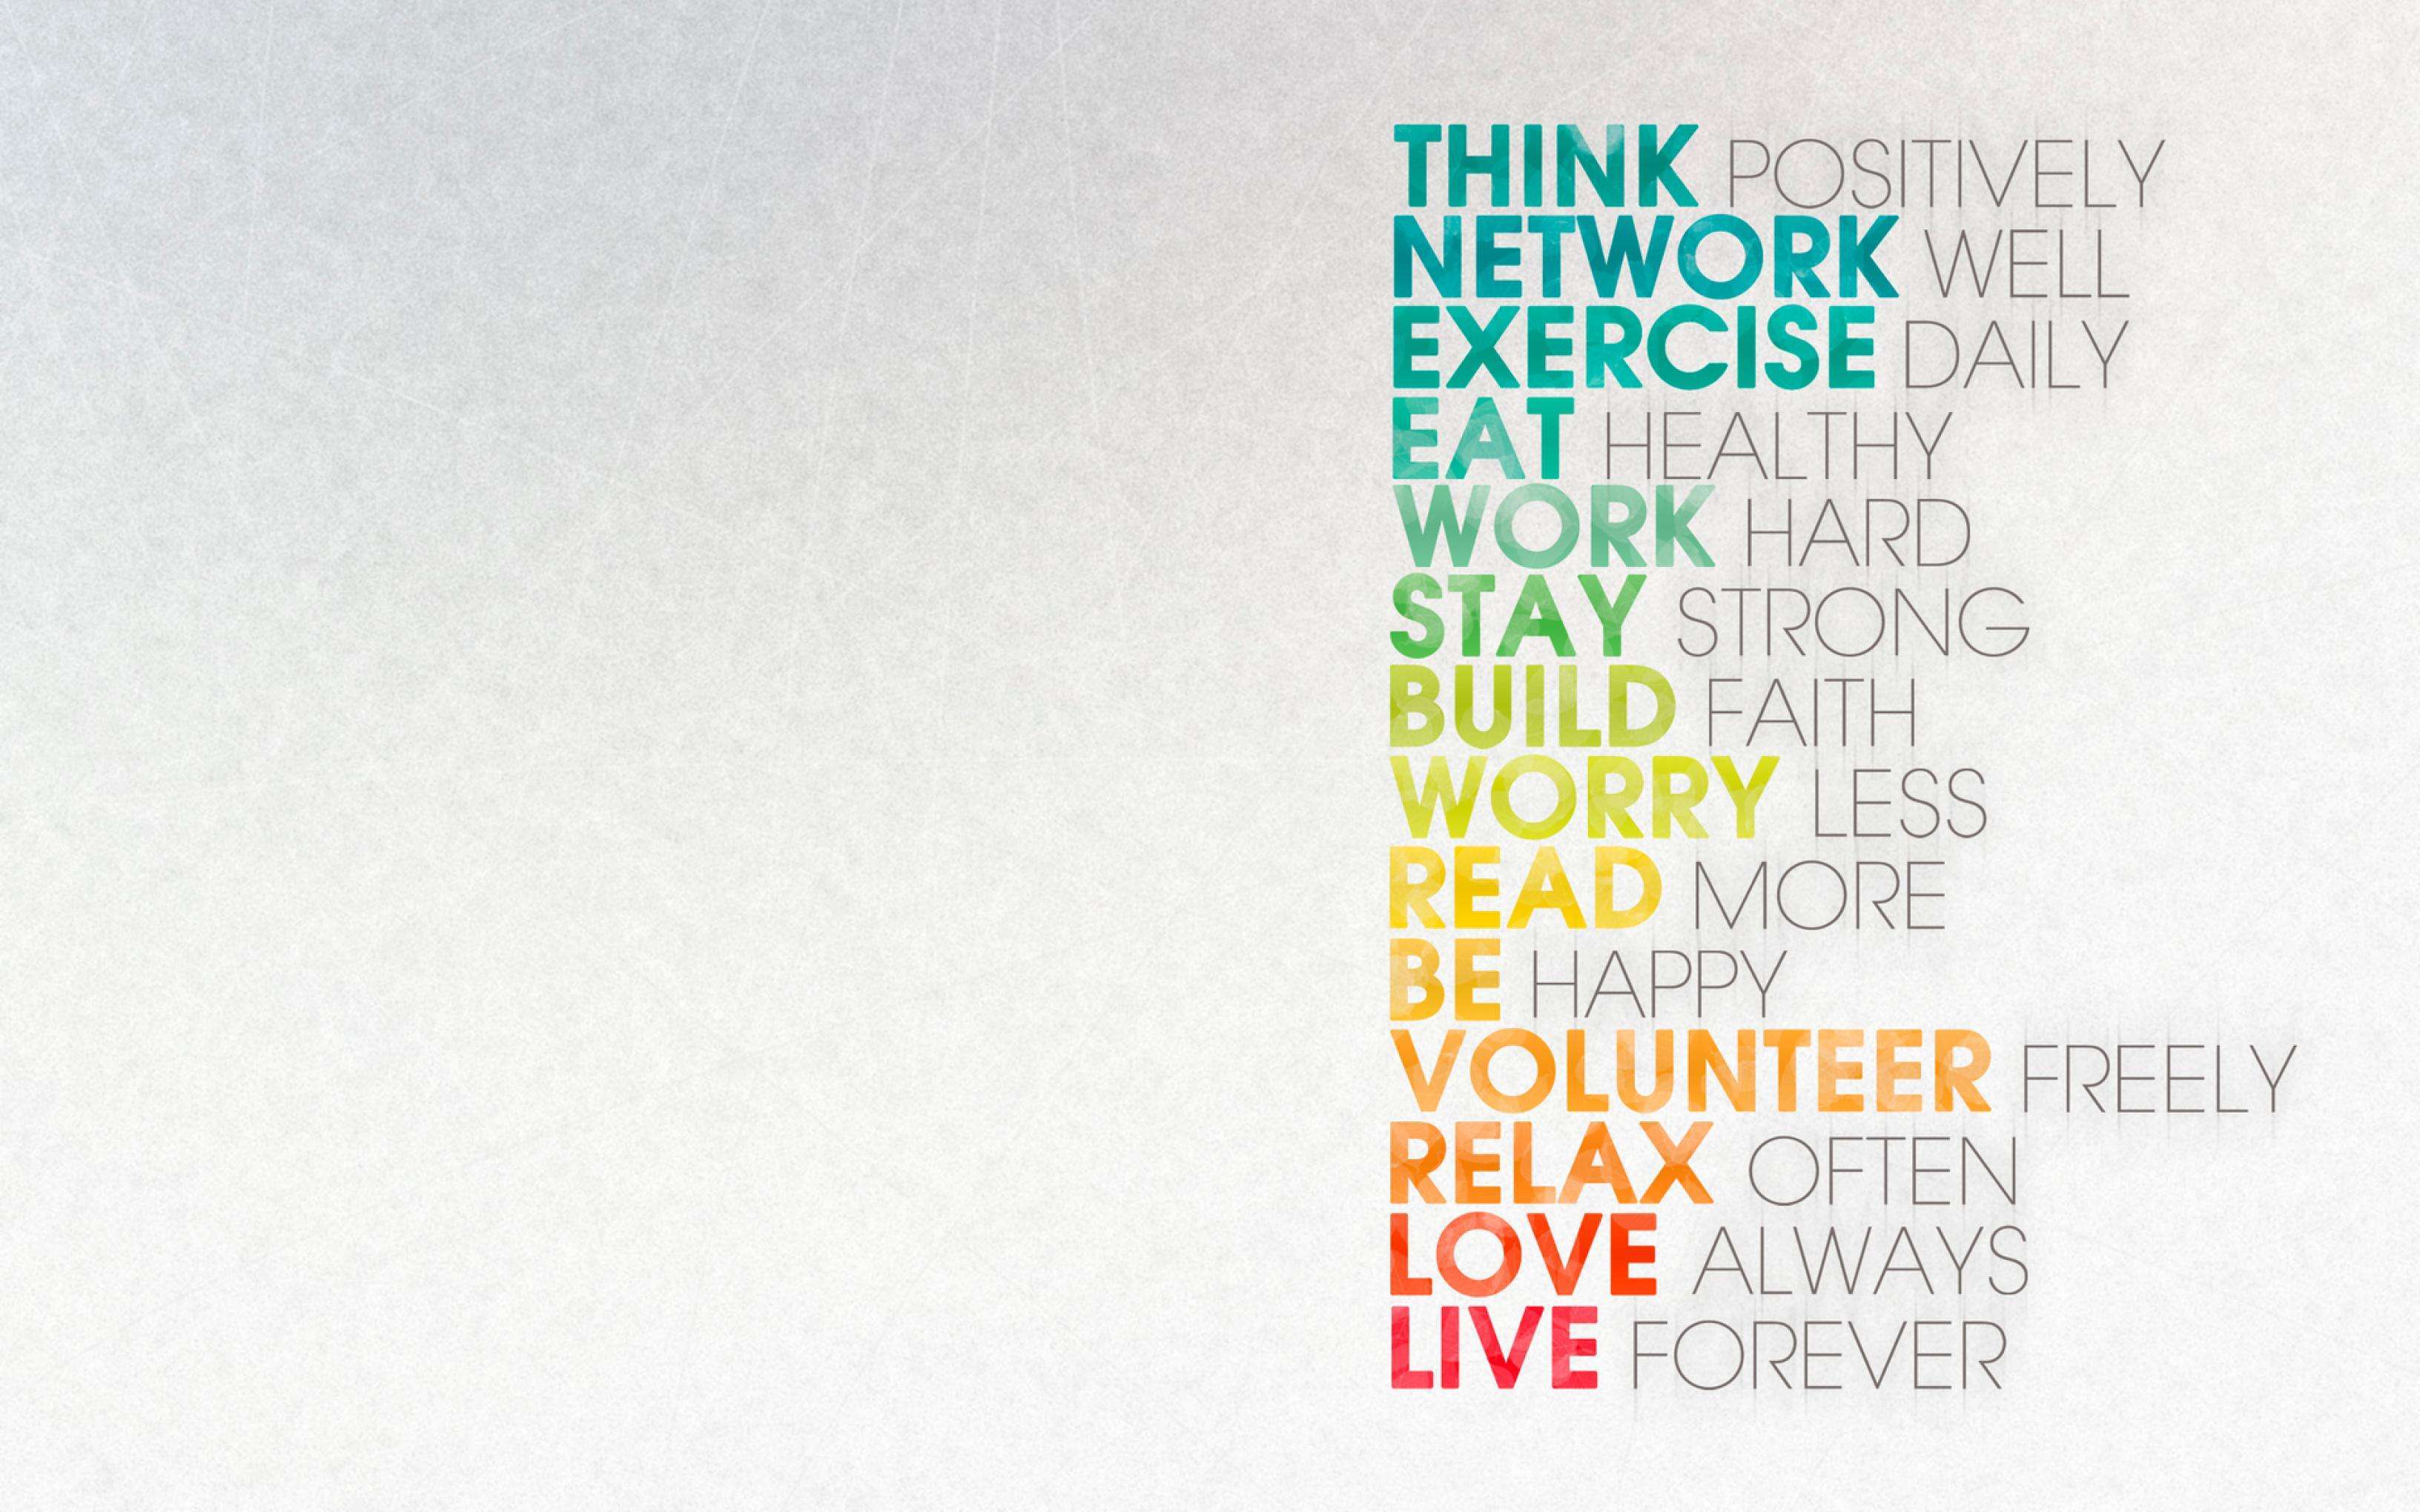 health inspiration wallpaper